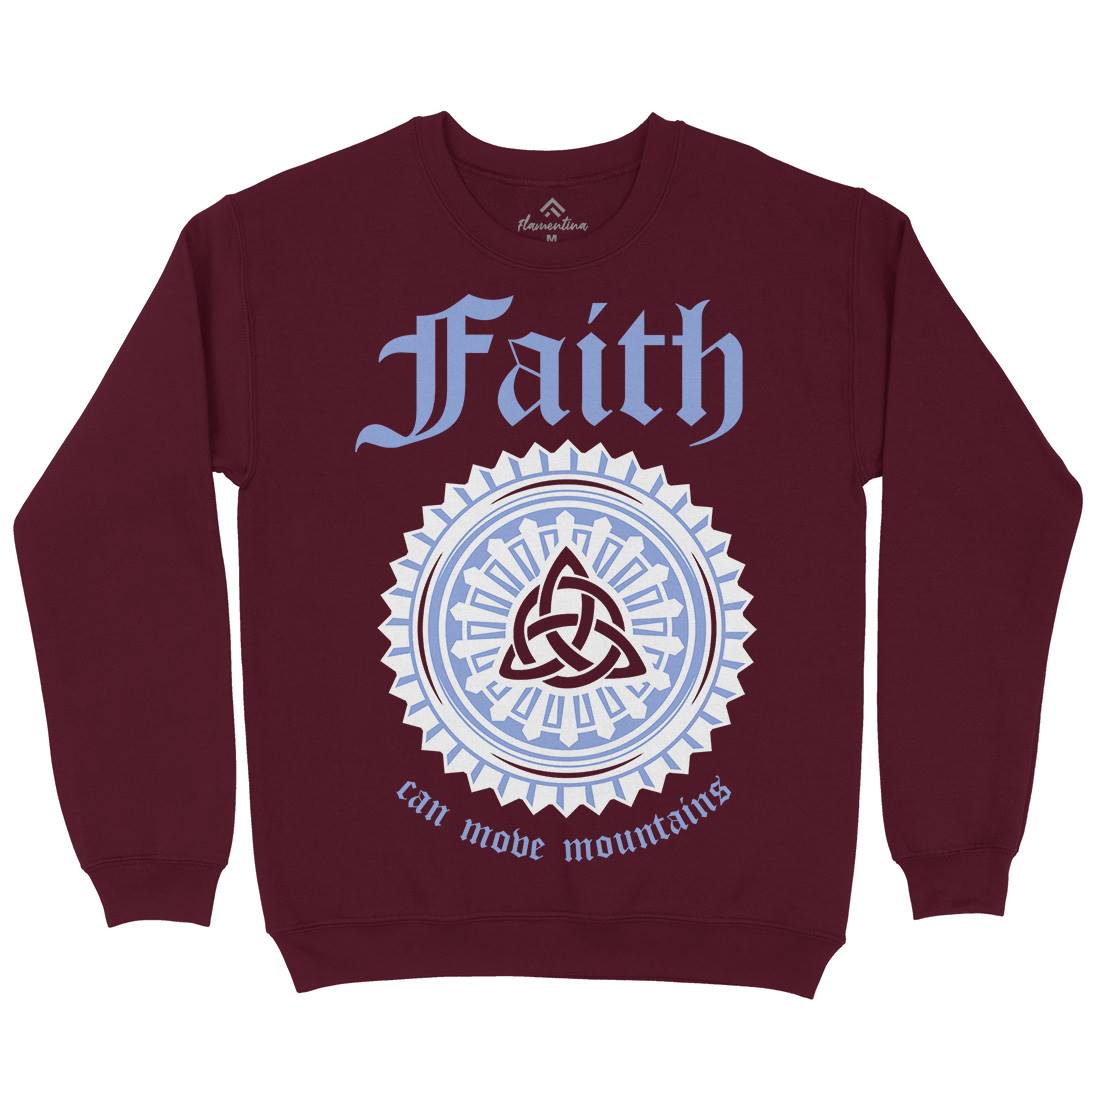 Faith Can Move Mountains Kids Crew Neck Sweatshirt Religion A314